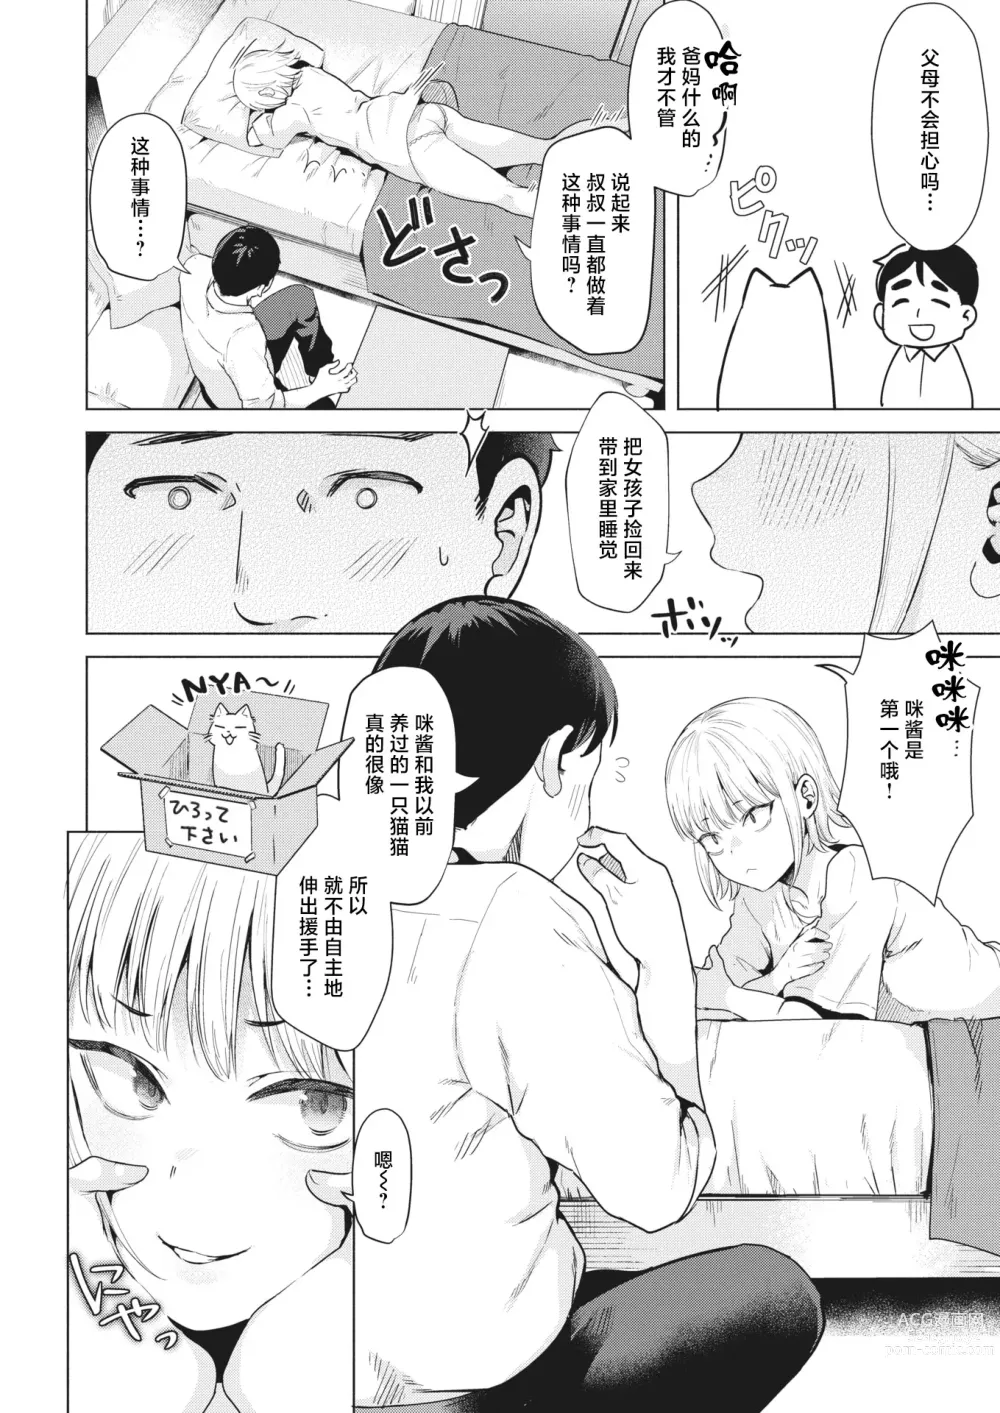 Page 4 of manga Suteneko o Hirottara